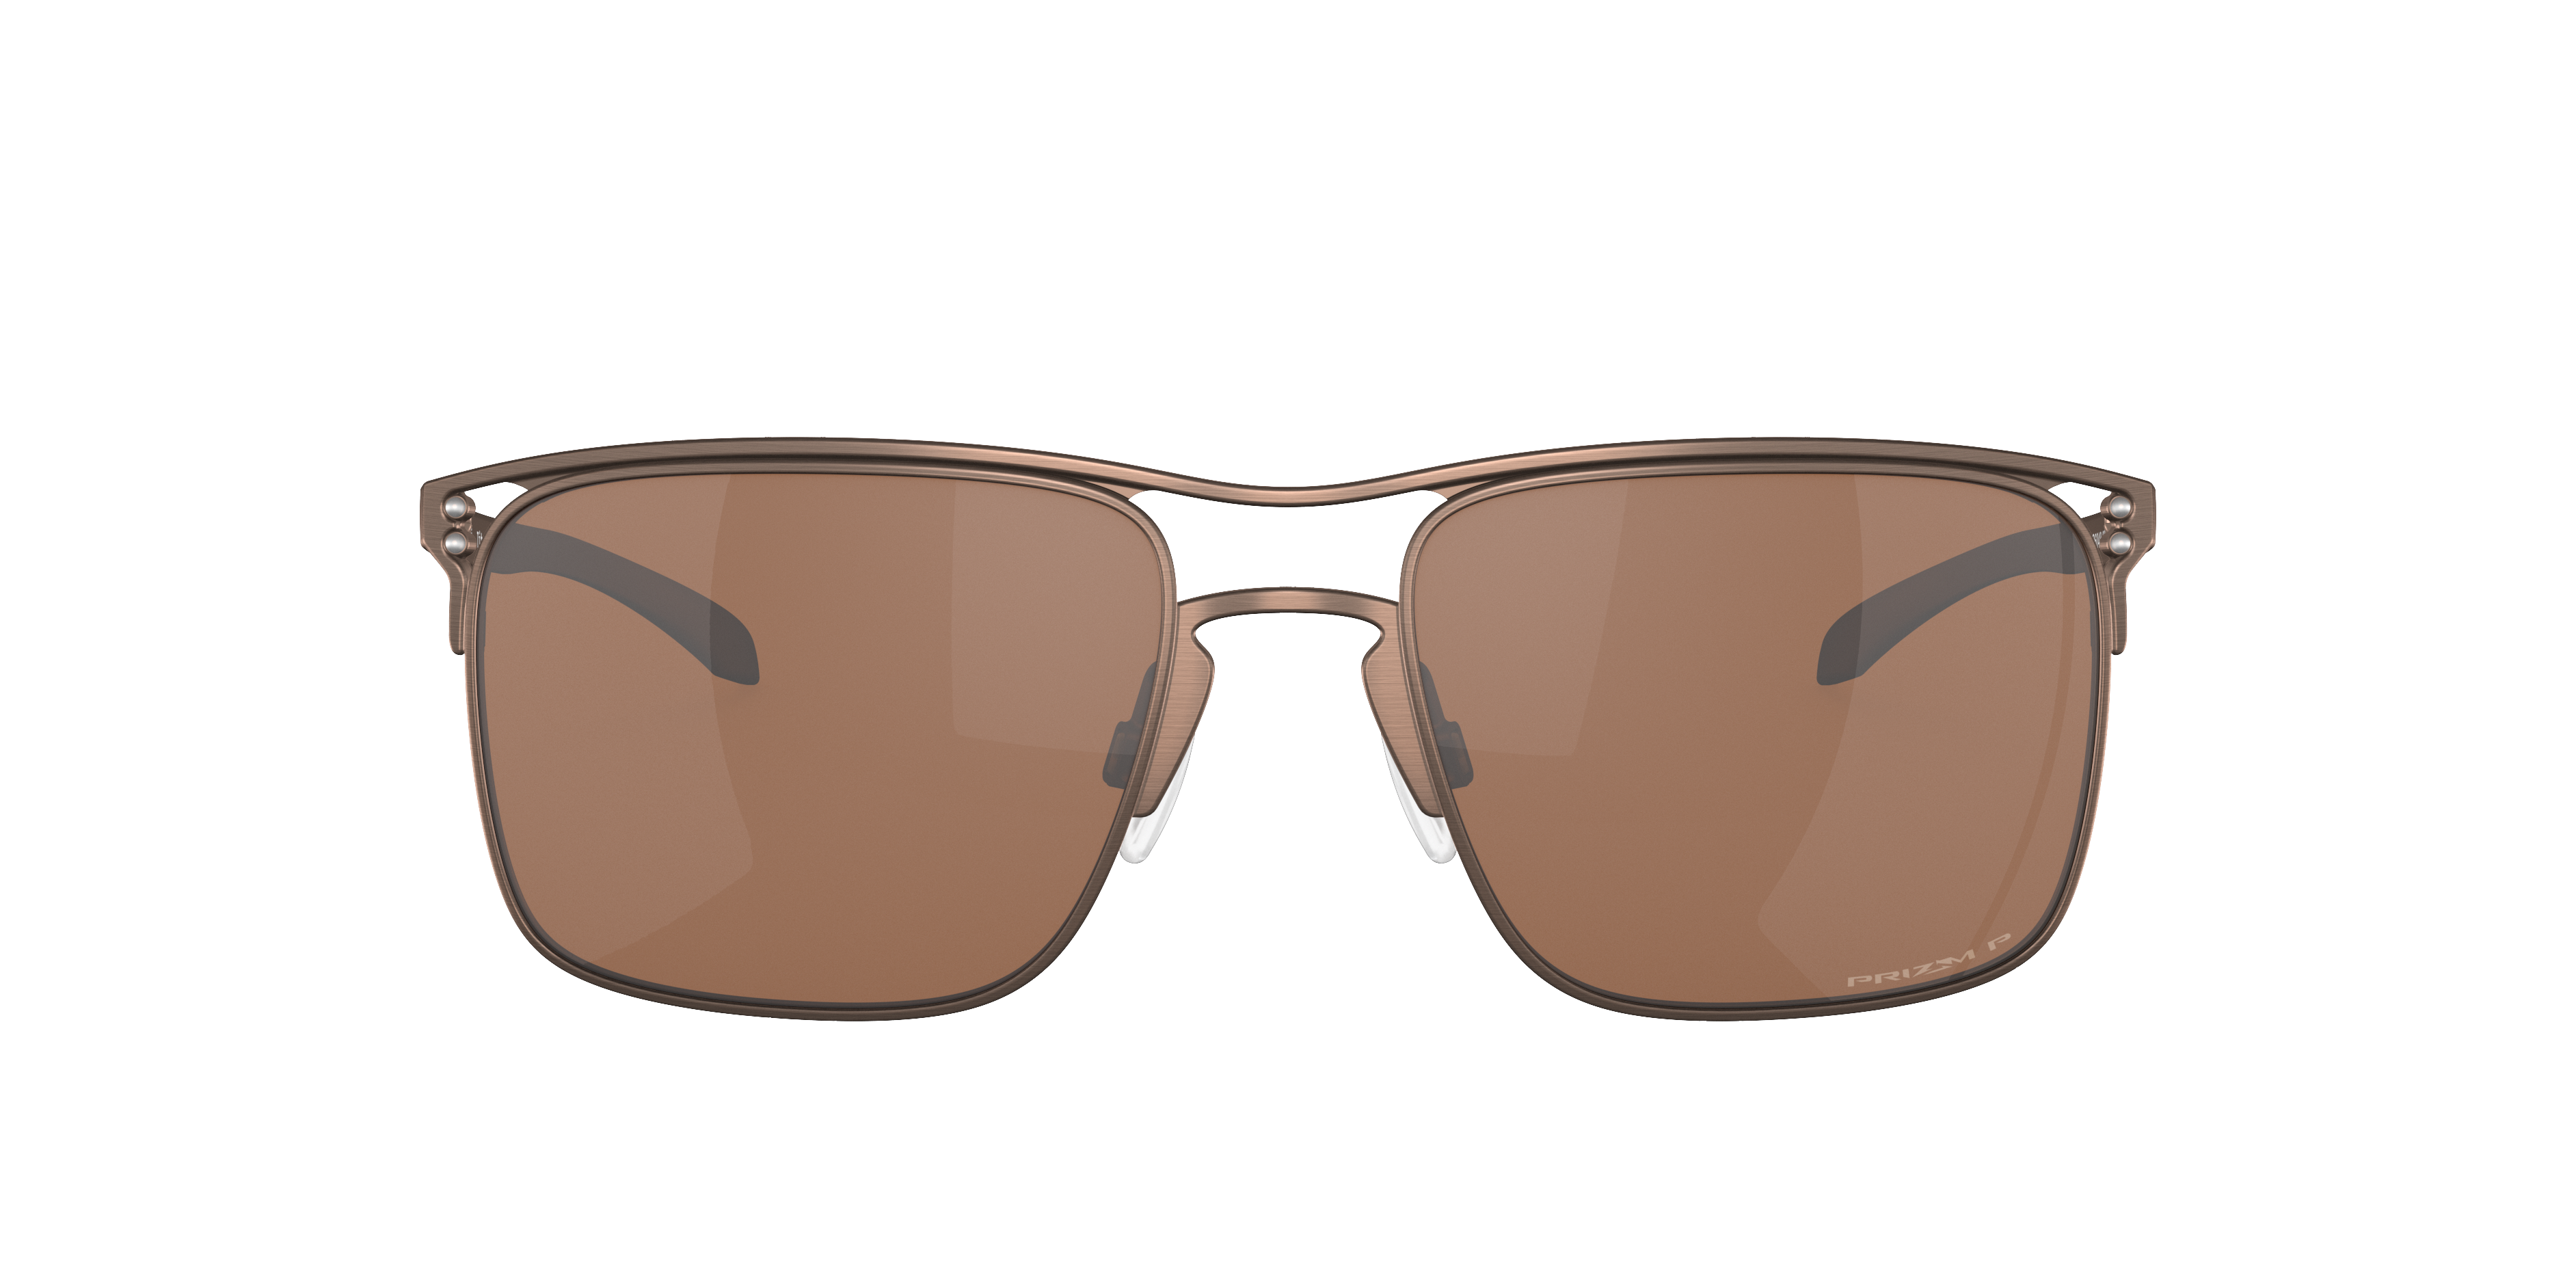 Oakley OO9238 Fives Squared® 54 Black Iridium Polarized & Polished Black Polarized  Sunglasses | Sunglass Hut USA